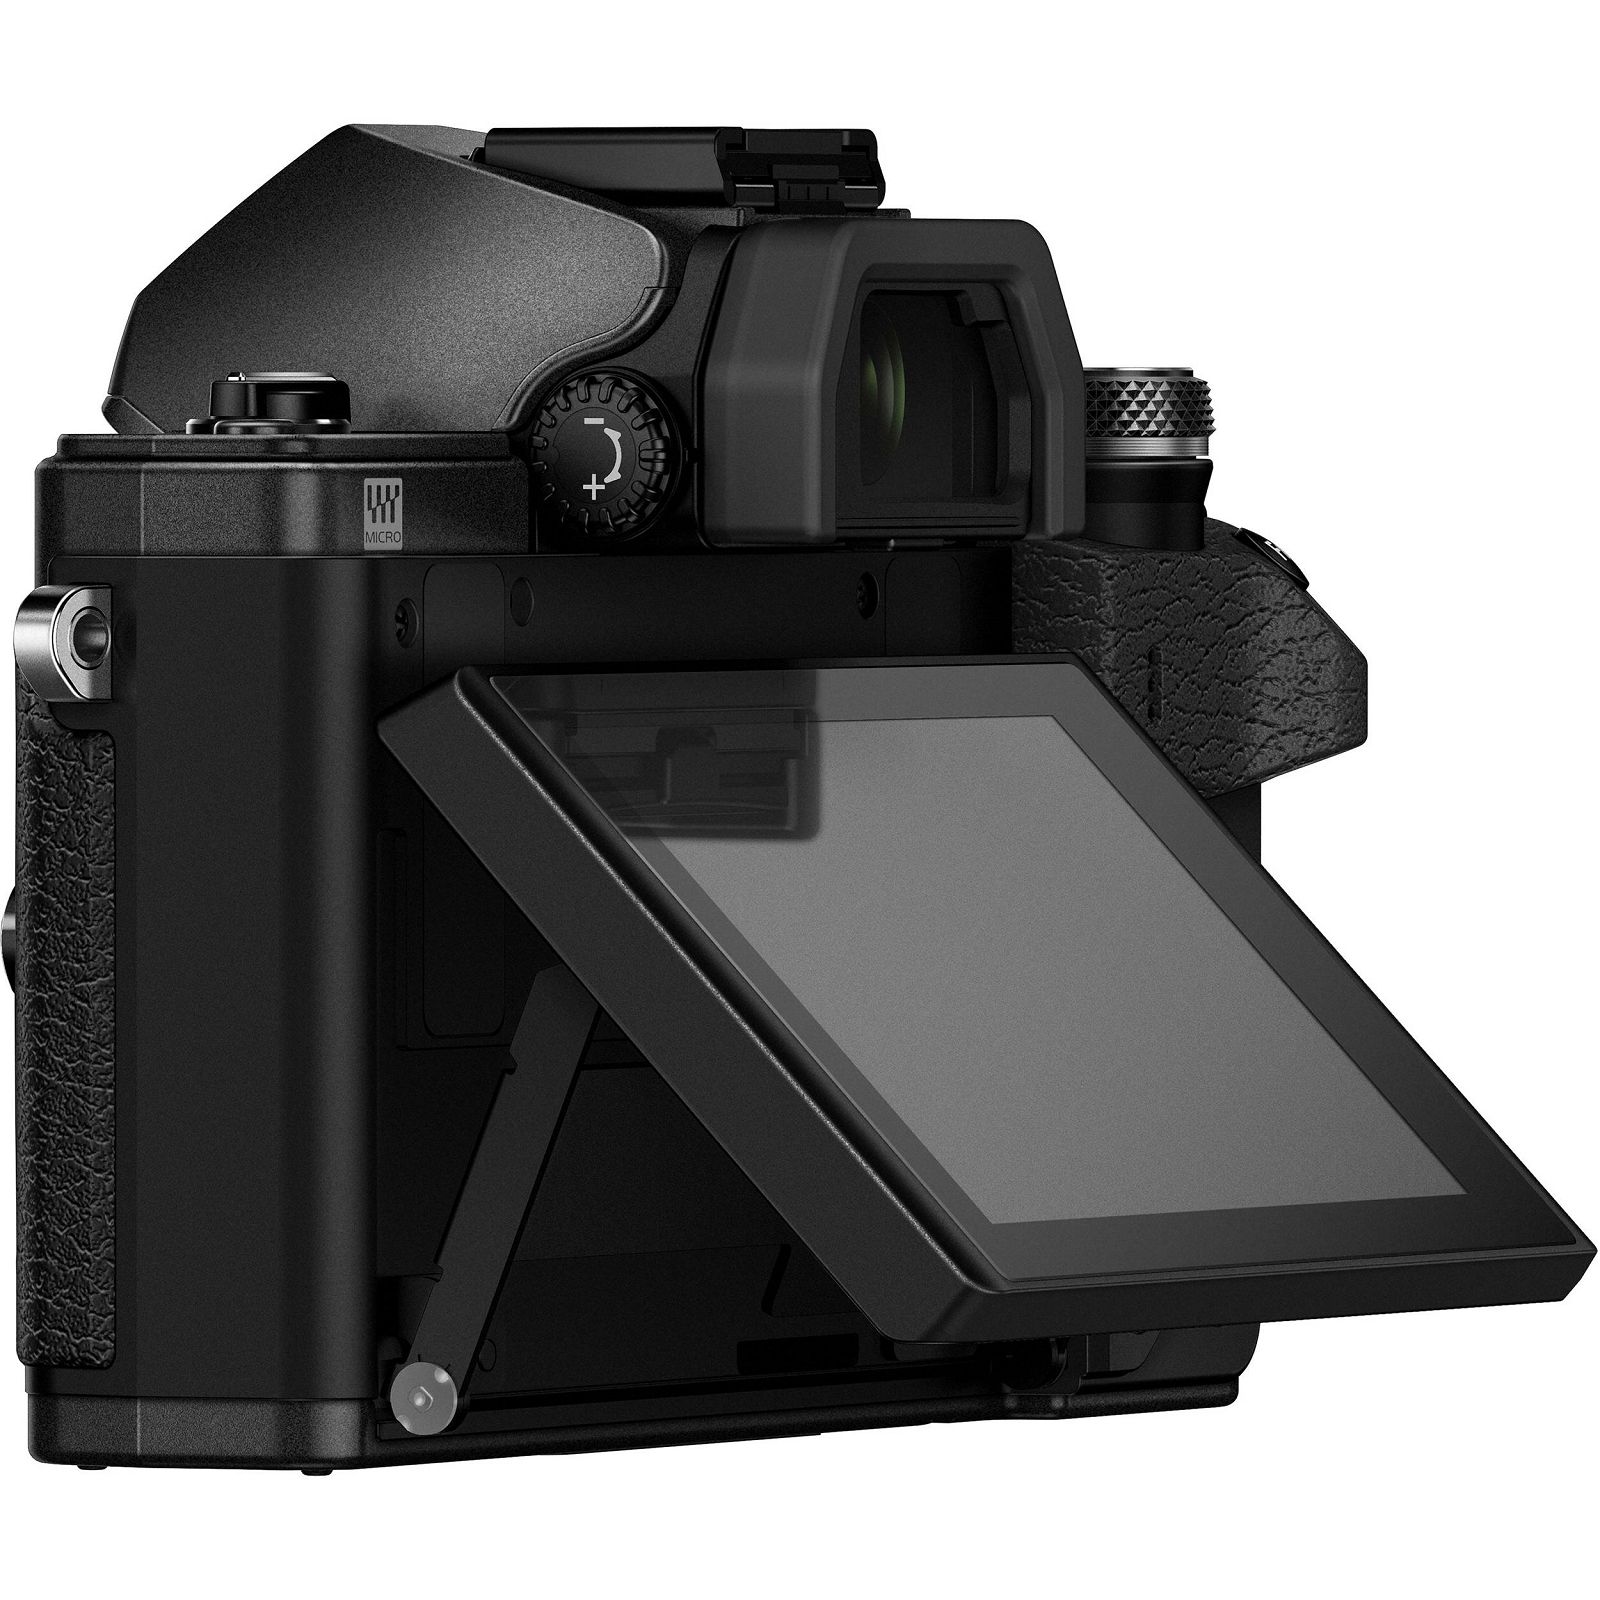 Olympus E-M10 II Body Black incl. Charger & Battery E-M10II crni Micro Four Thirds MFT - OM-D Camera digitalni fotoaparat V207050BE000